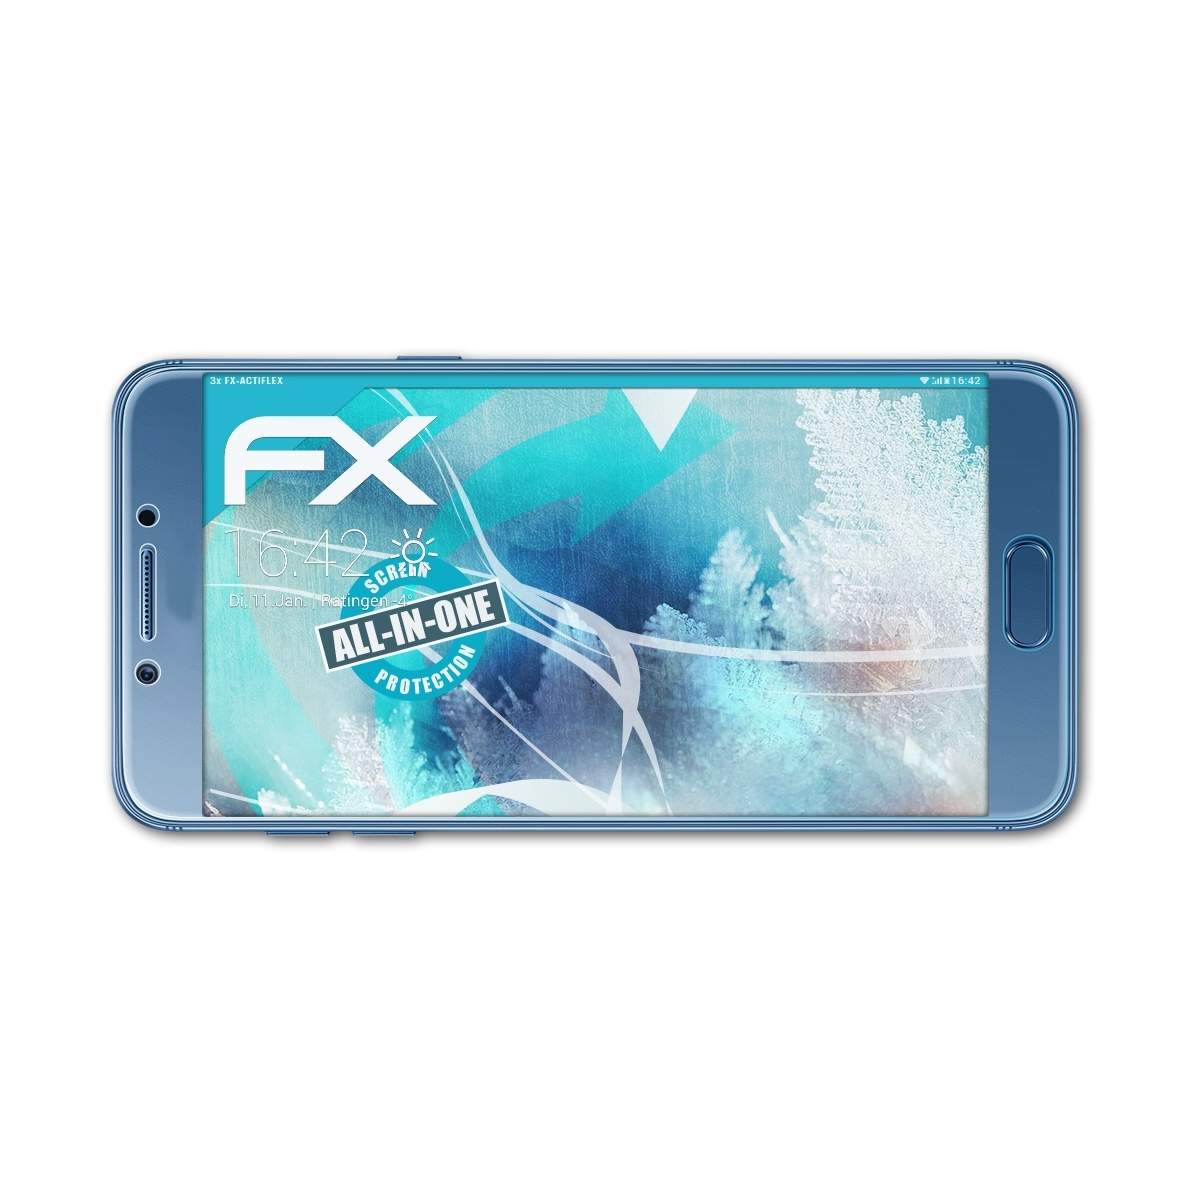 ATFOLIX 3x FX-ActiFleX Displayschutz(für C5 Pro Samsung (SM-C5010)) Galaxy